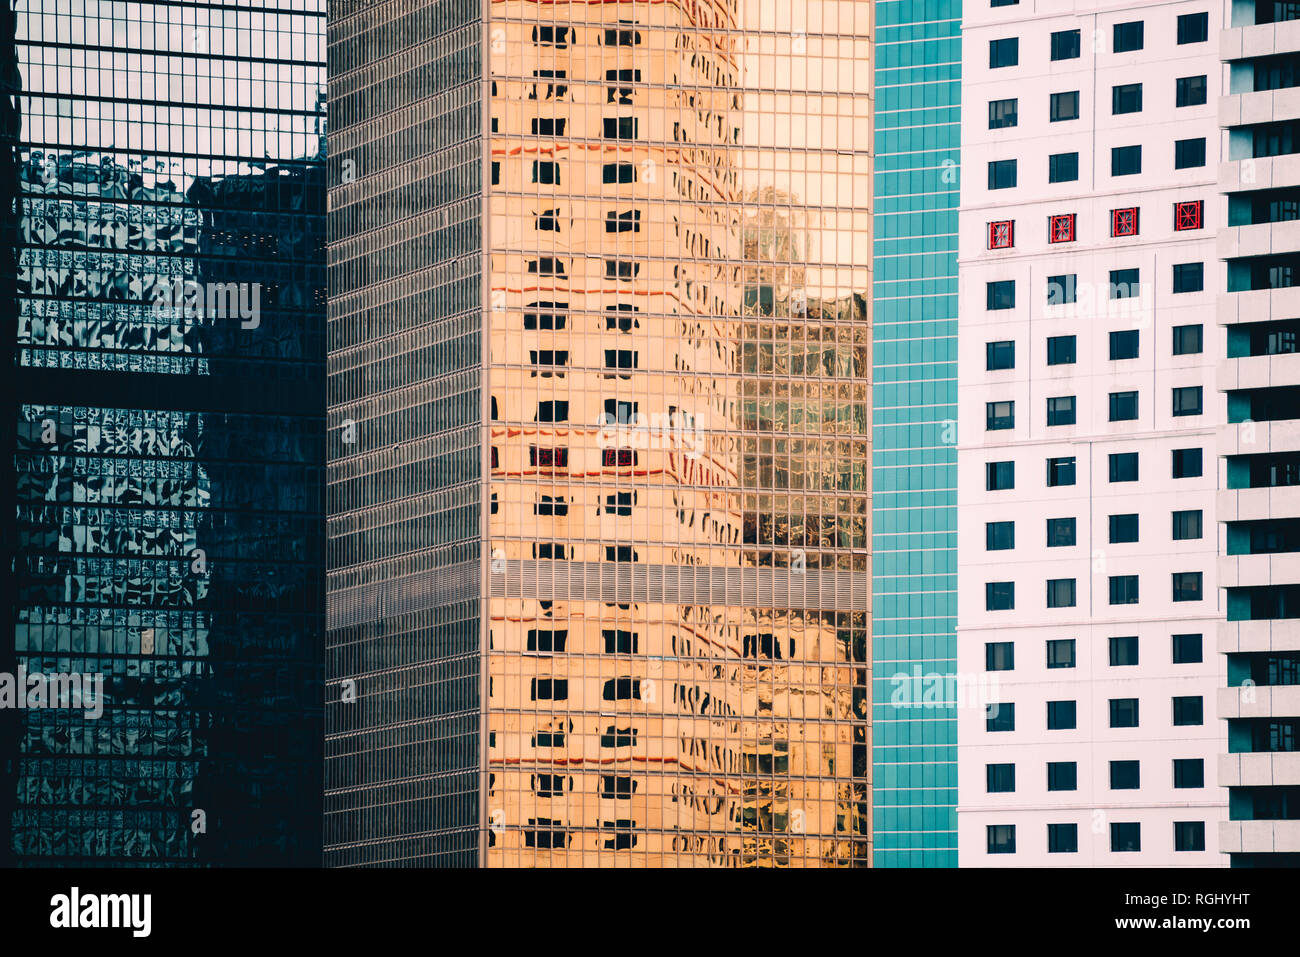 La Chine, Hong Kong, Hong Kong Island, façades des gratte-ciel, vue partielle Banque D'Images